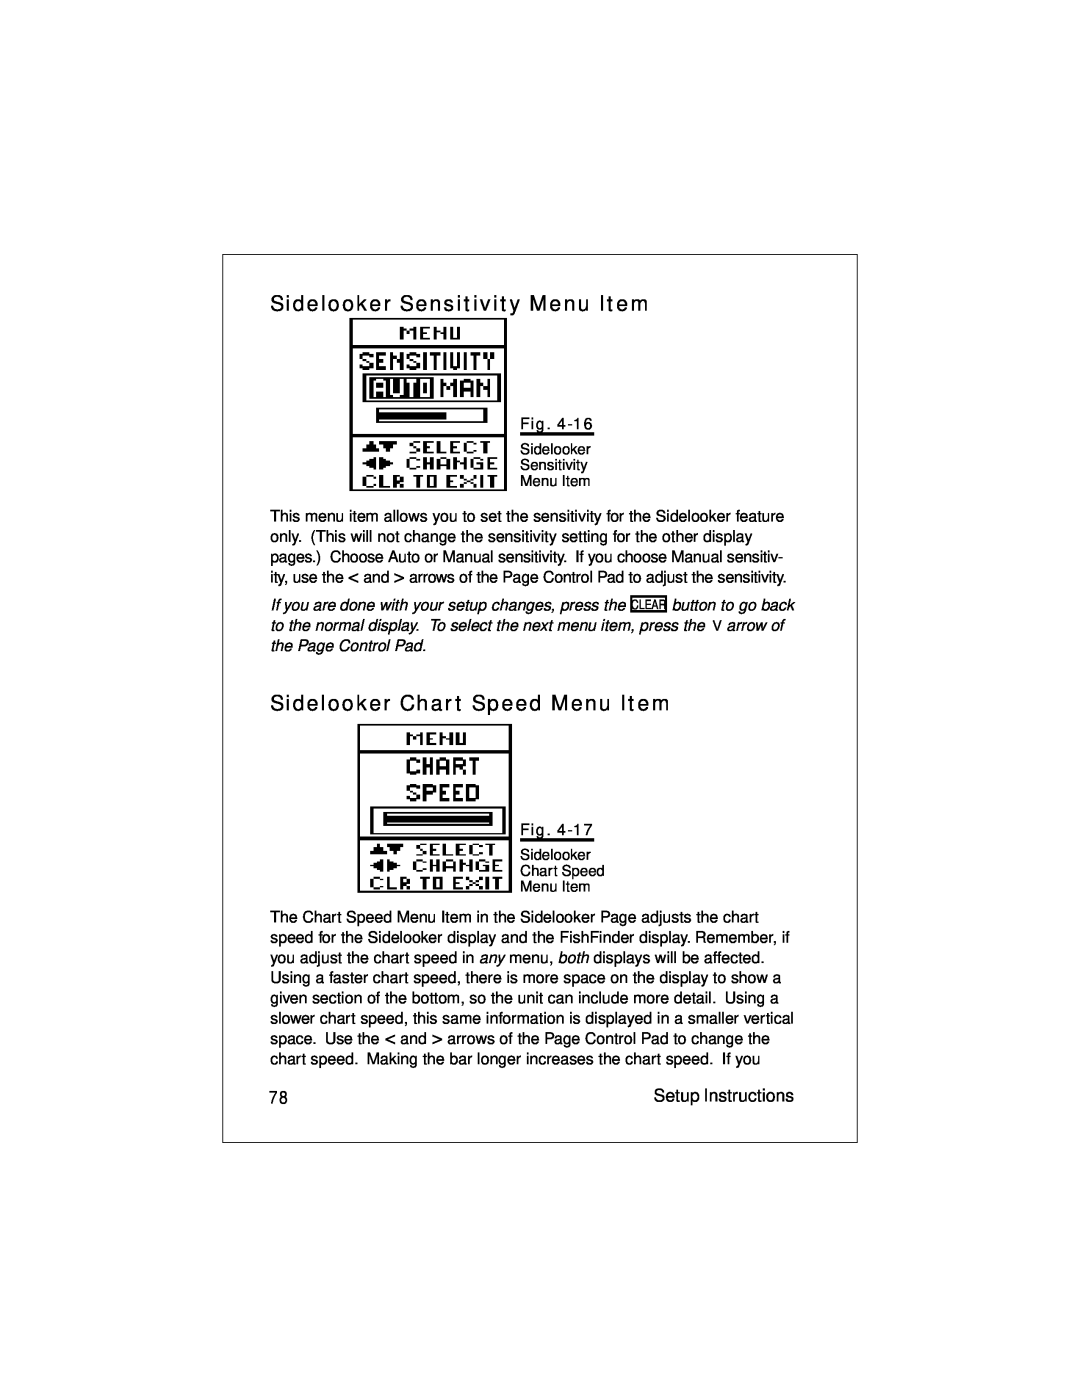 Raymarine L470 instruction manual Sidelooker Sensitivity Menu Item, Sidelooker Chart Speed Menu Item, Setup Instructions 